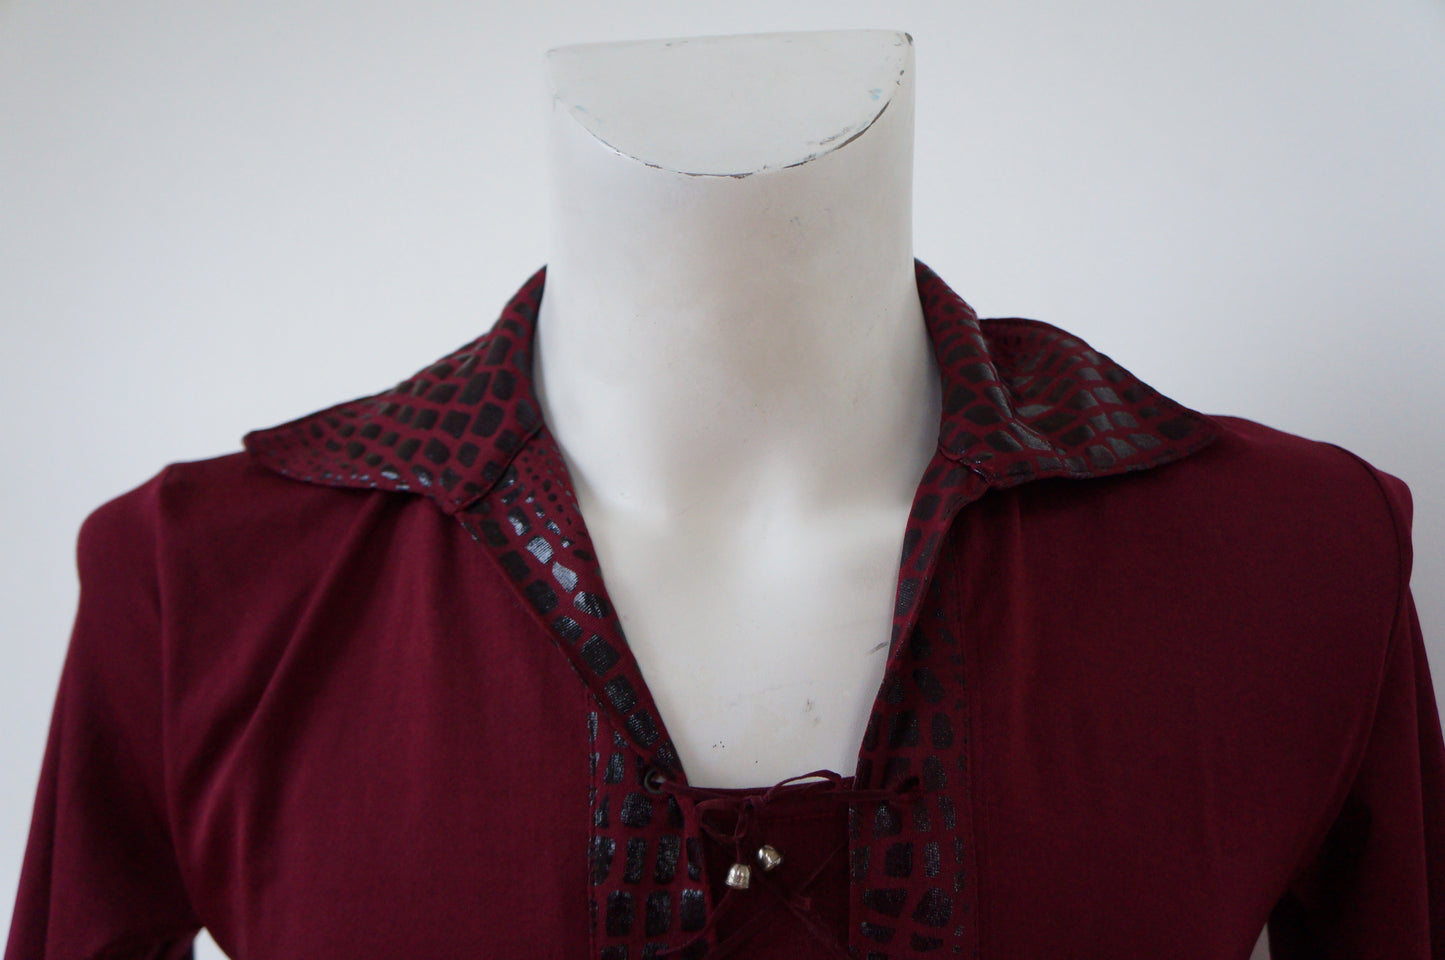 Burgundy lace-up shirt